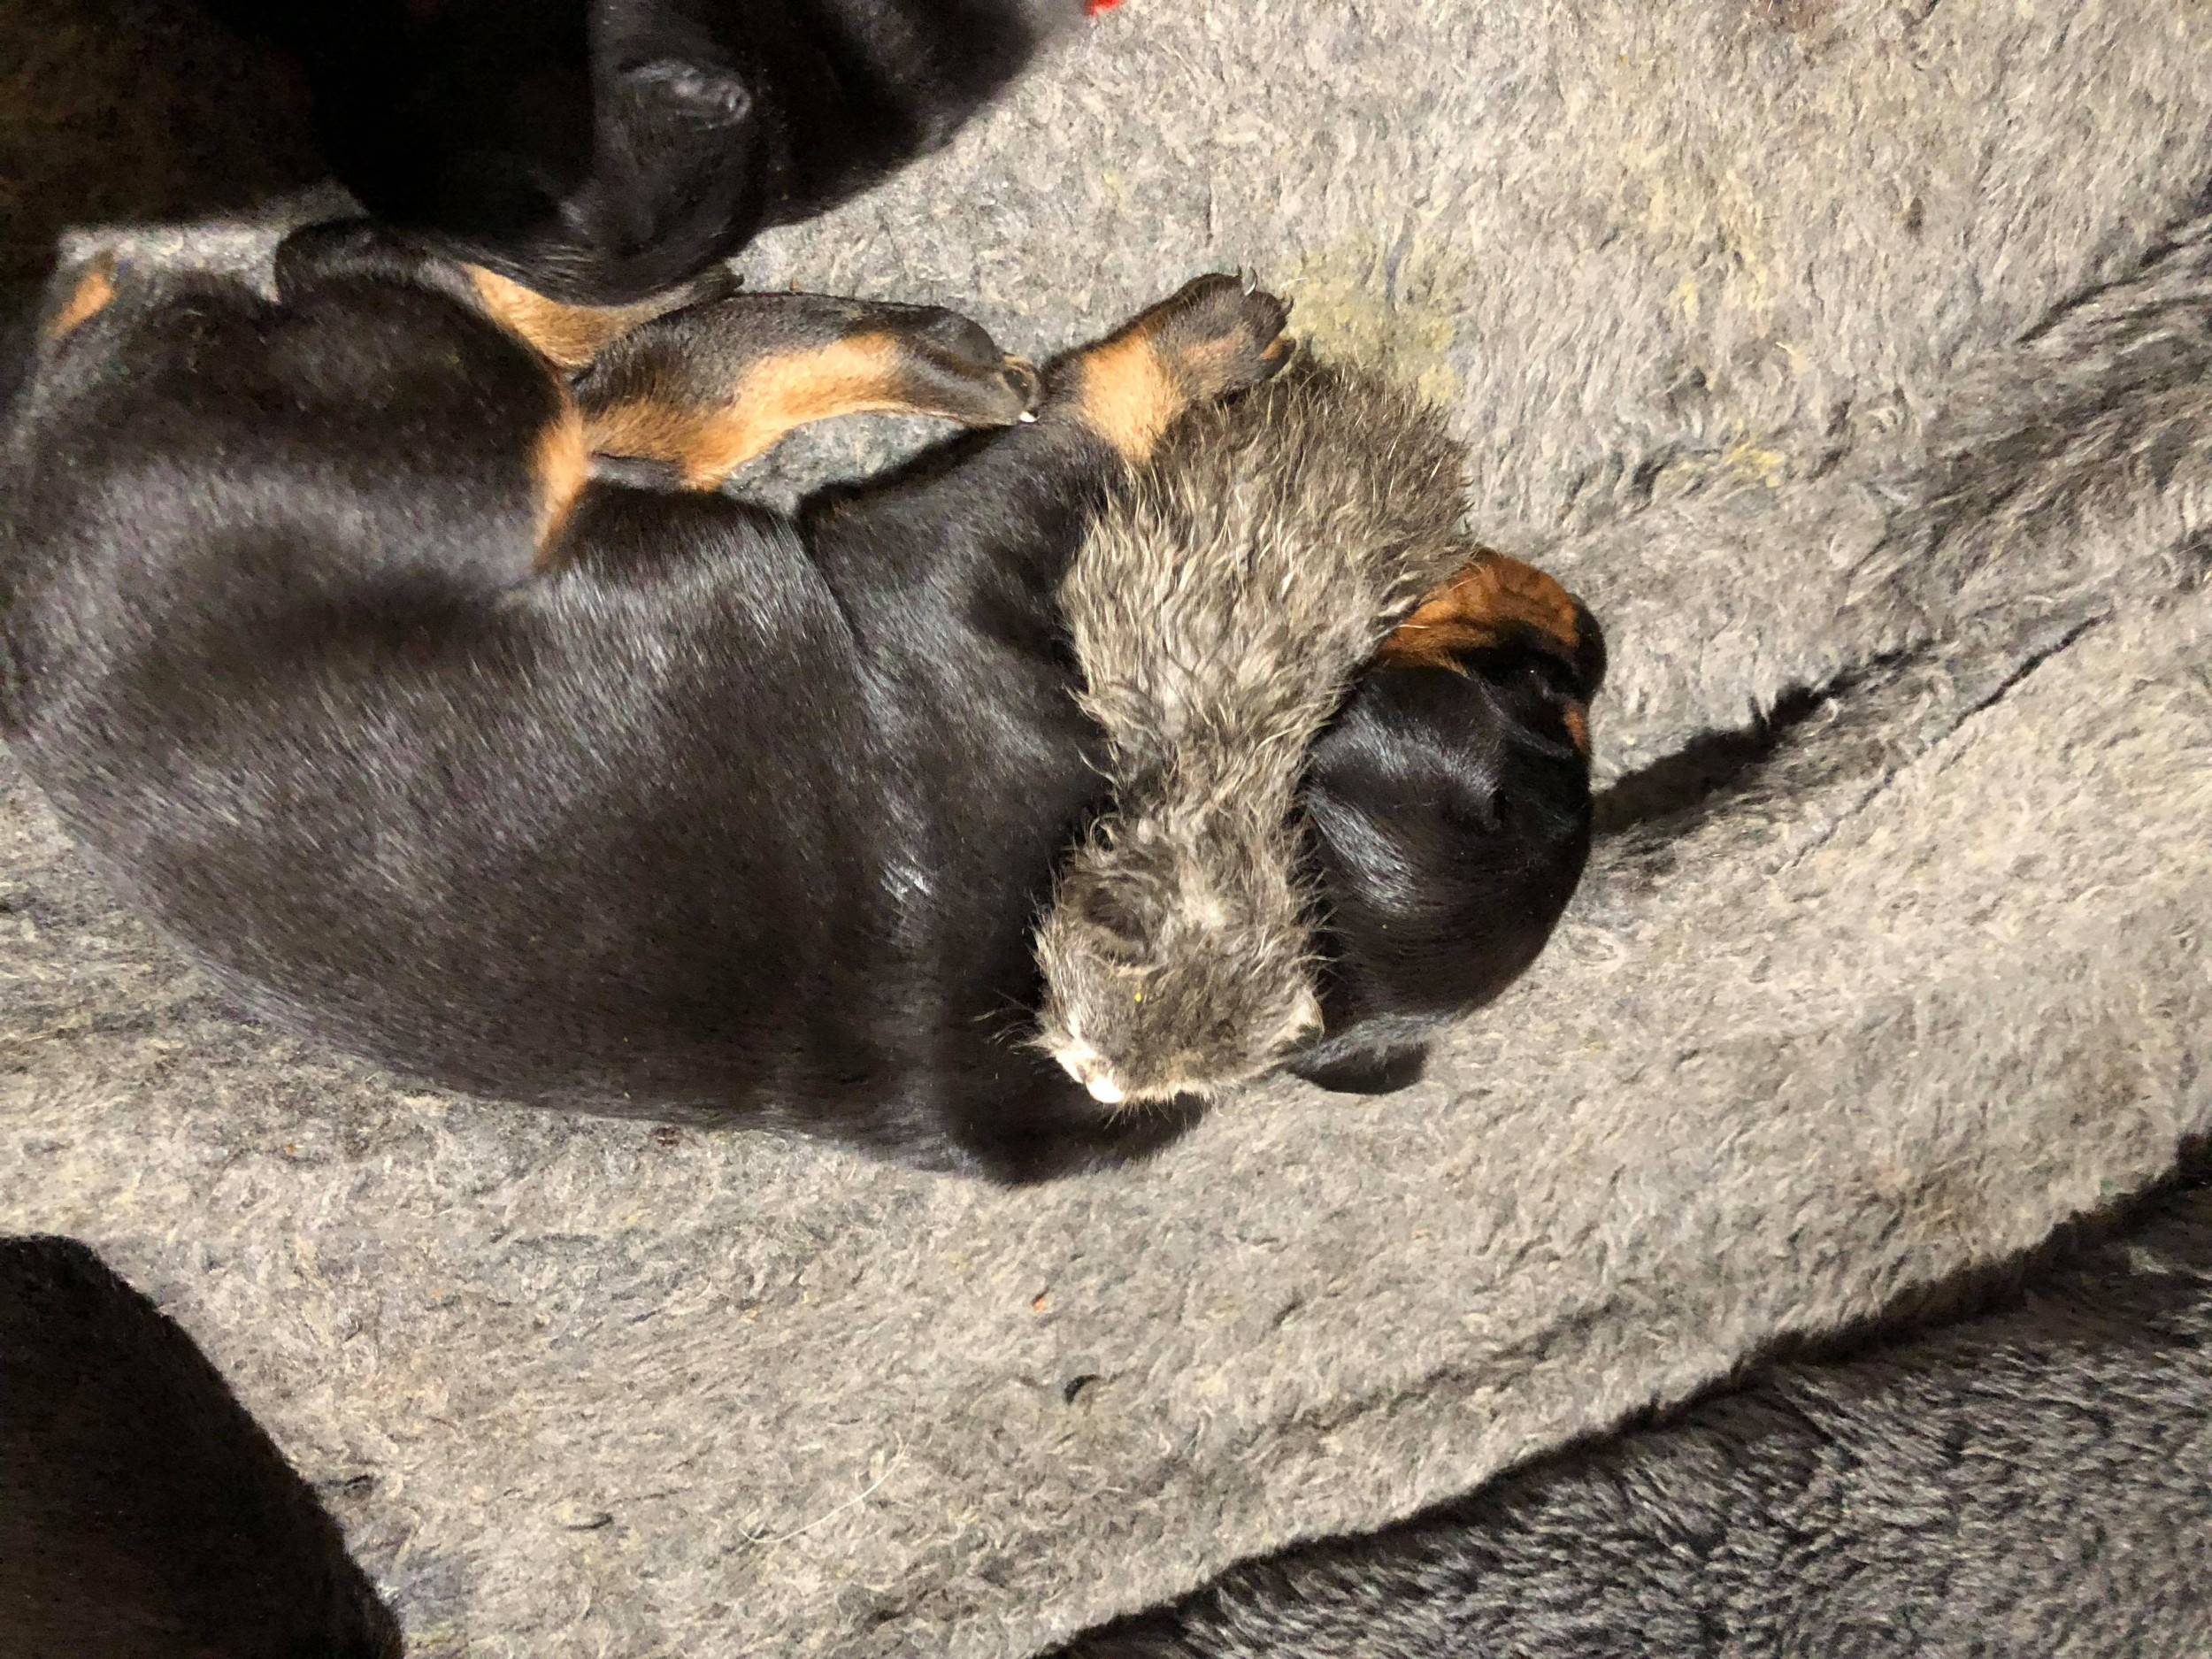 abandoned newborn found cuddling with puppies